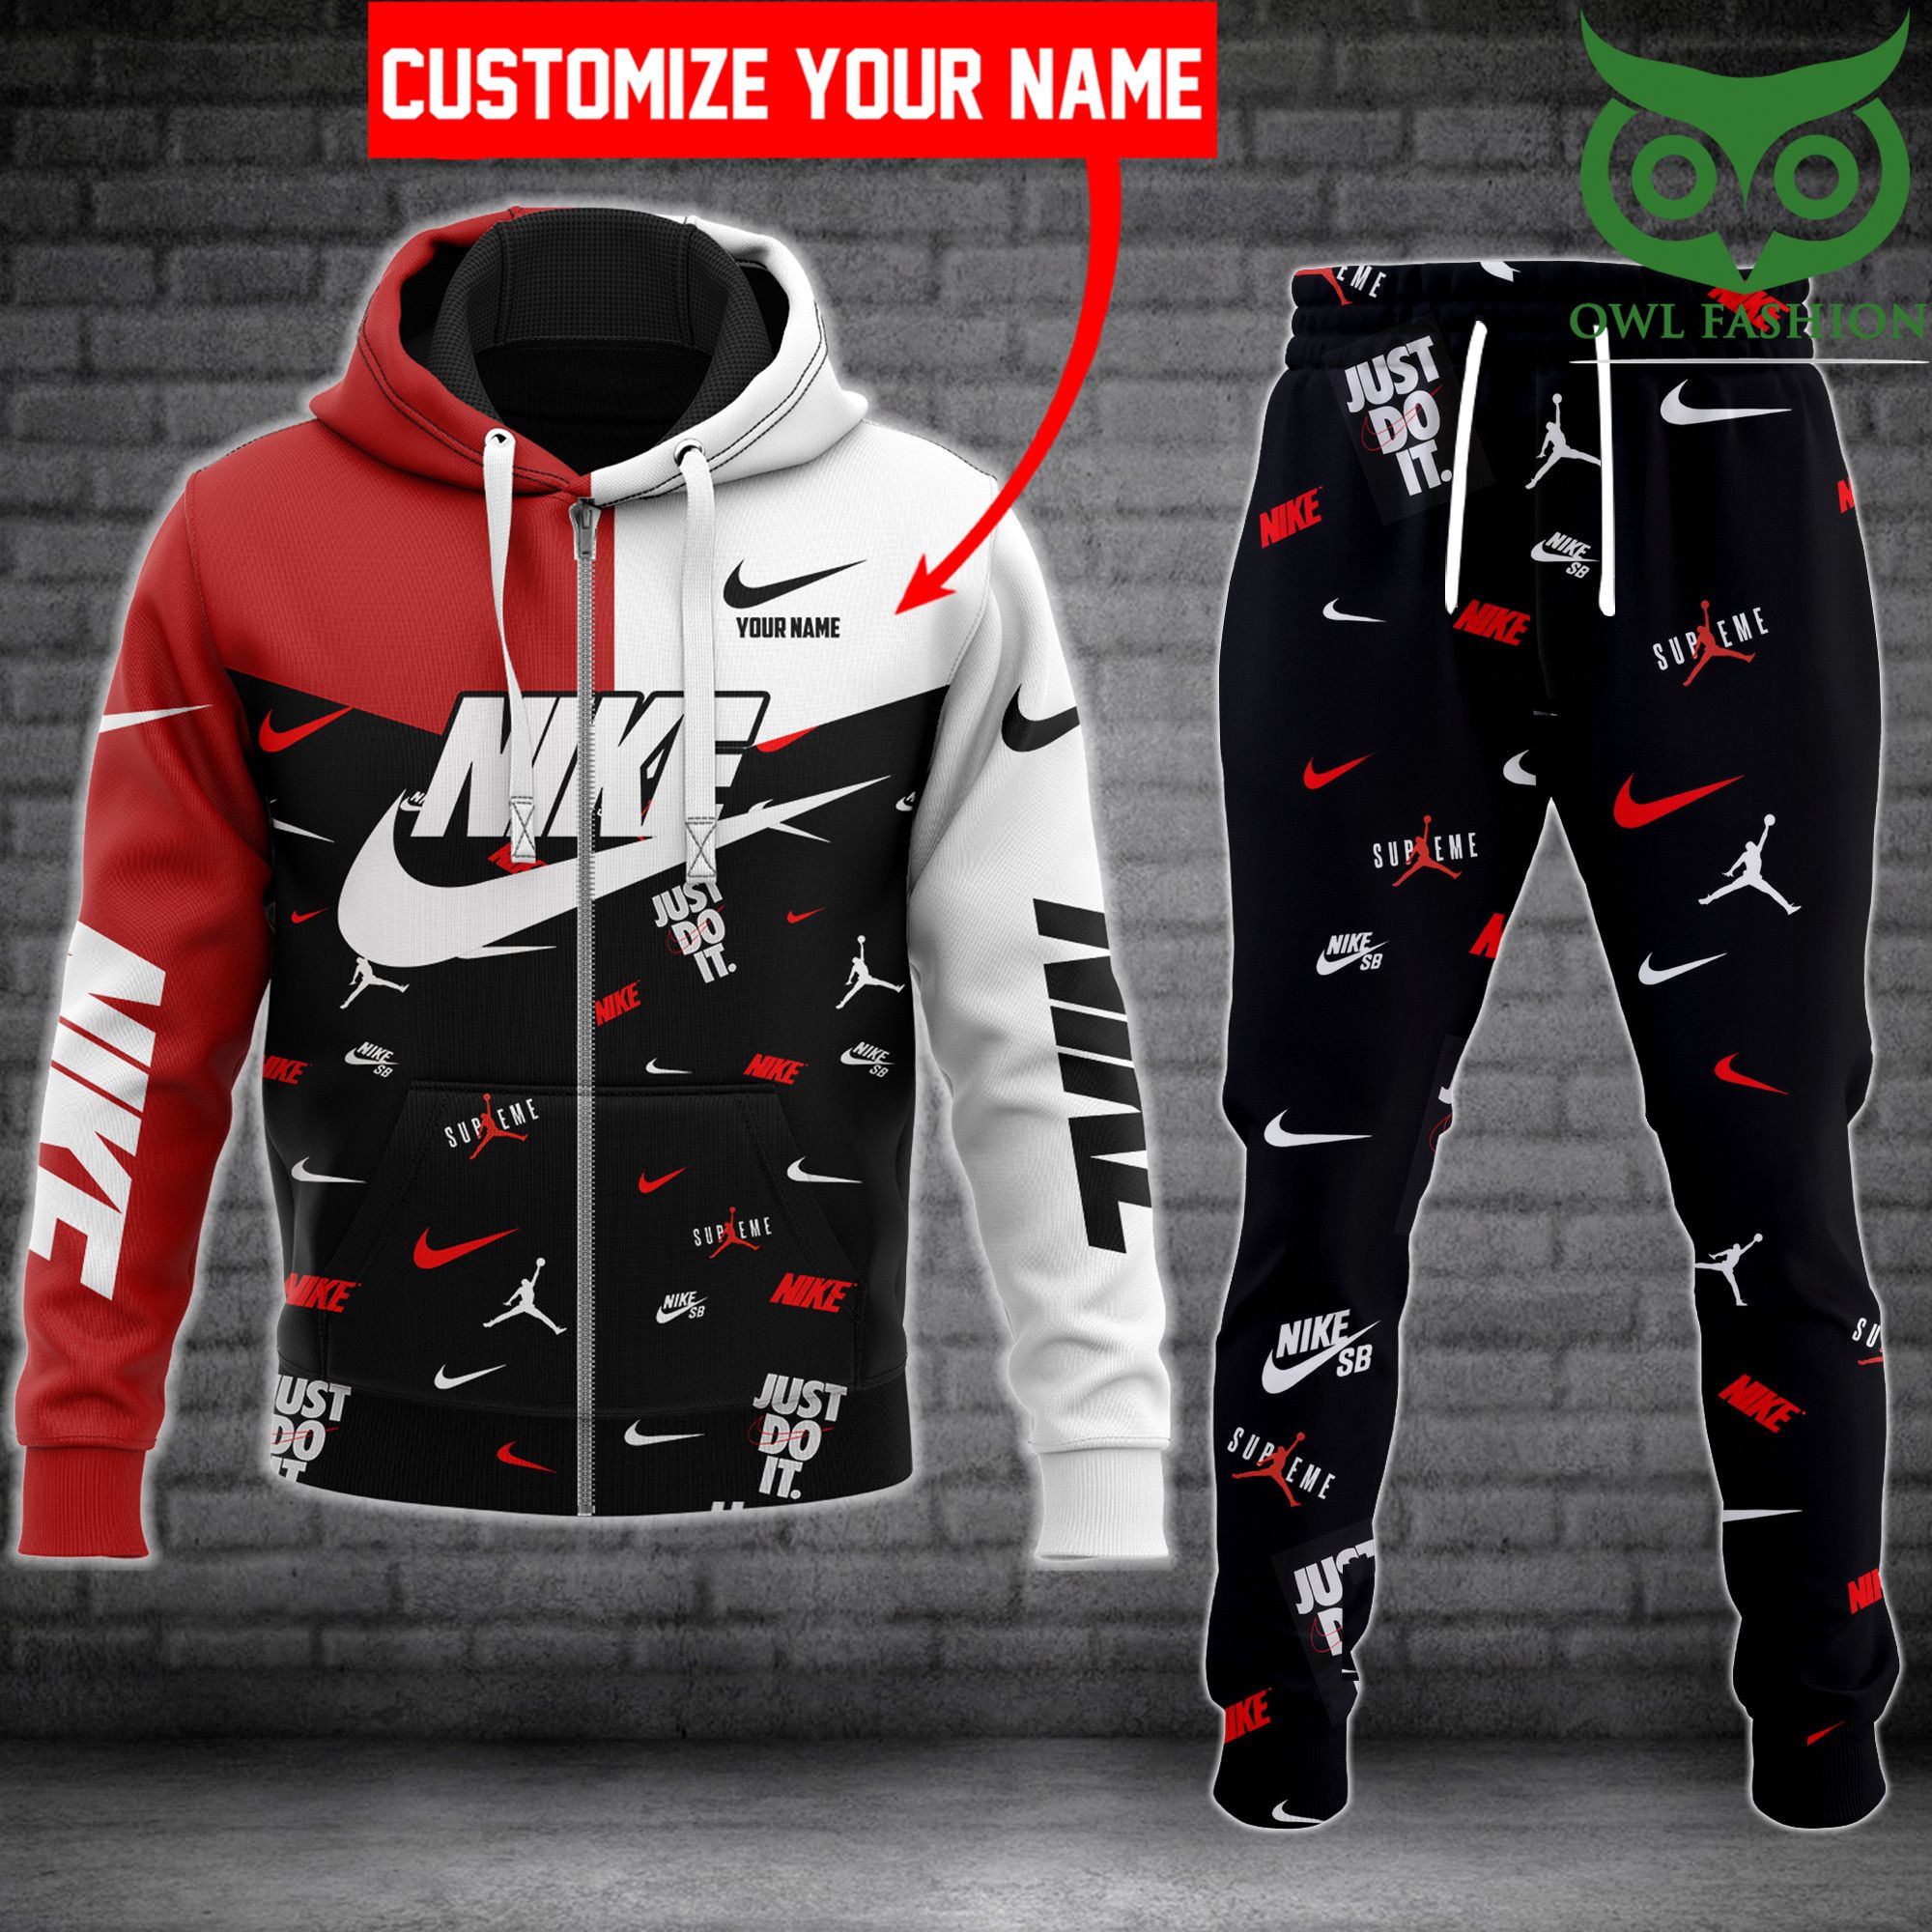 28 Nike Red Jordan personalized hoodies and sweatpants